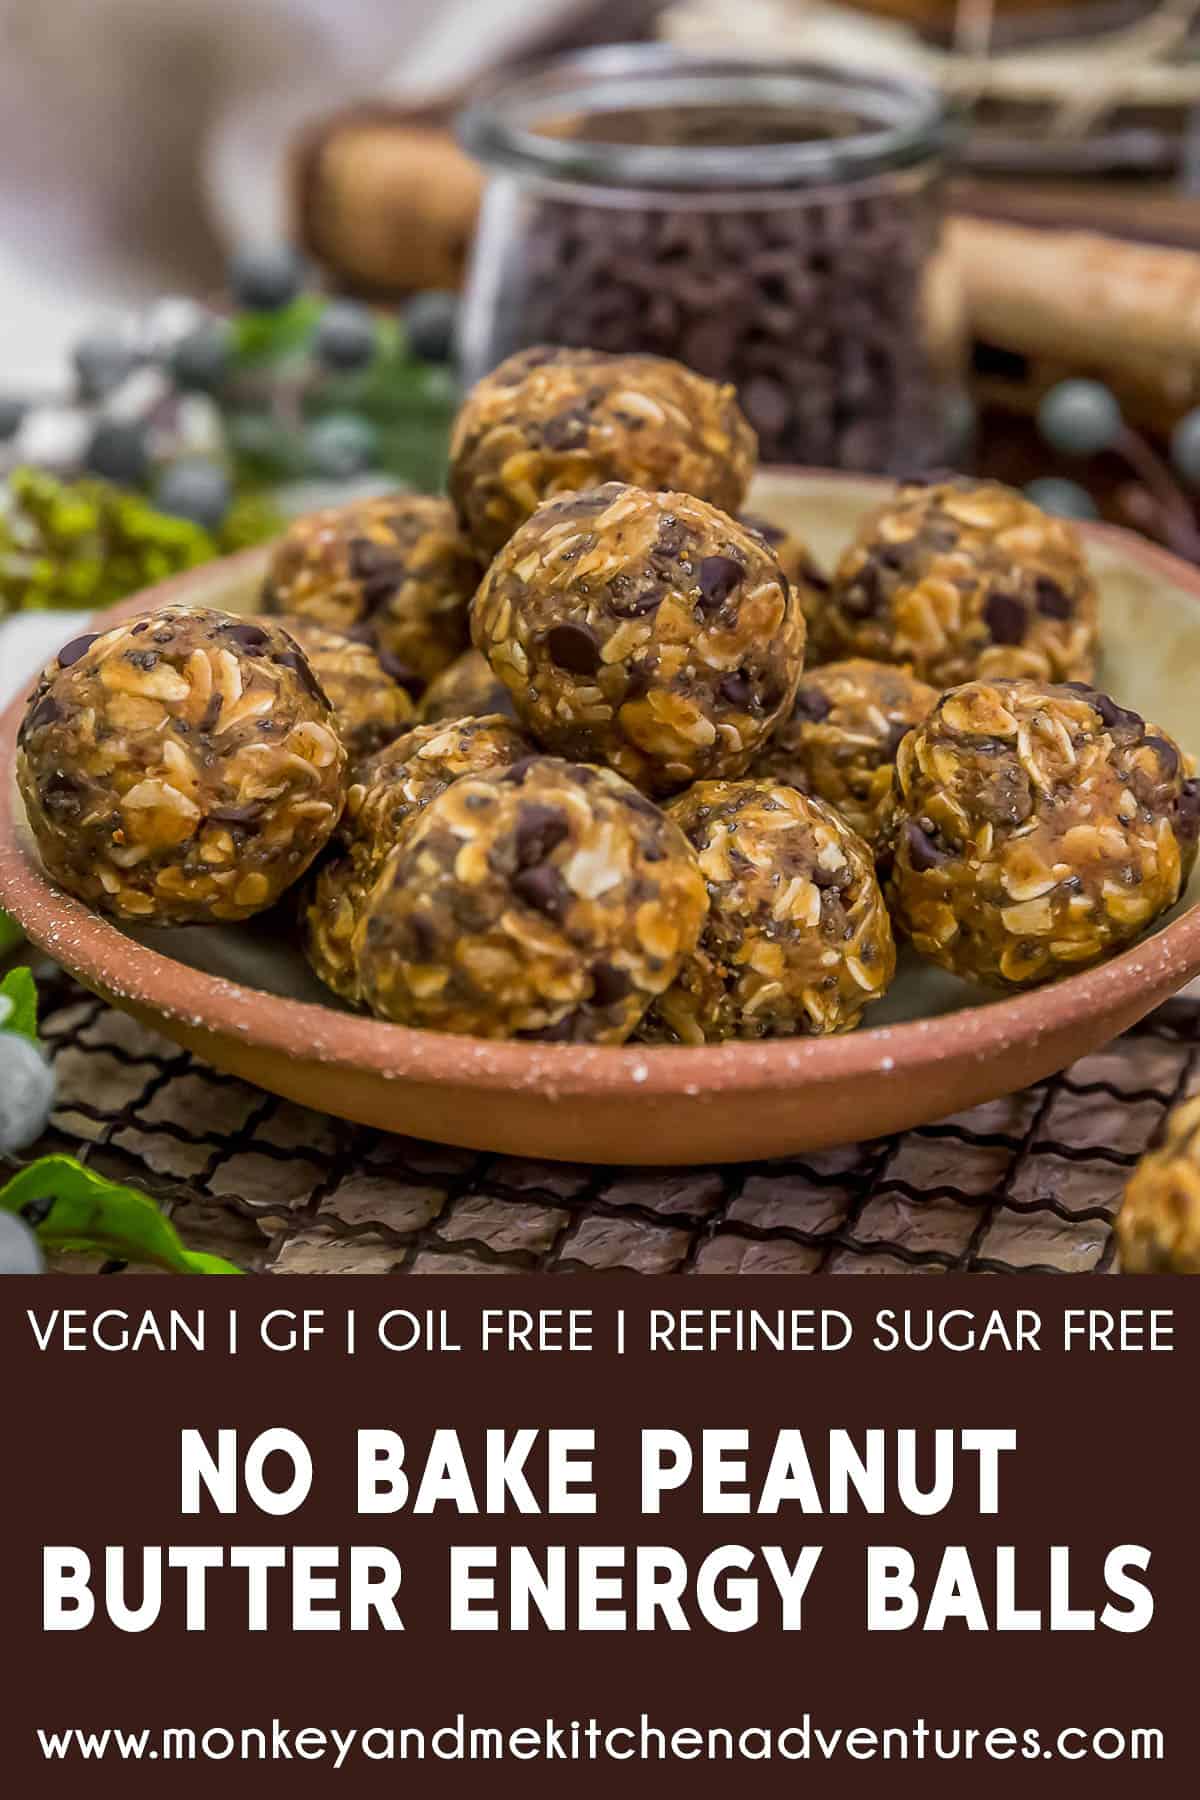 No Bake Peanut Butter Energy Balls with text description